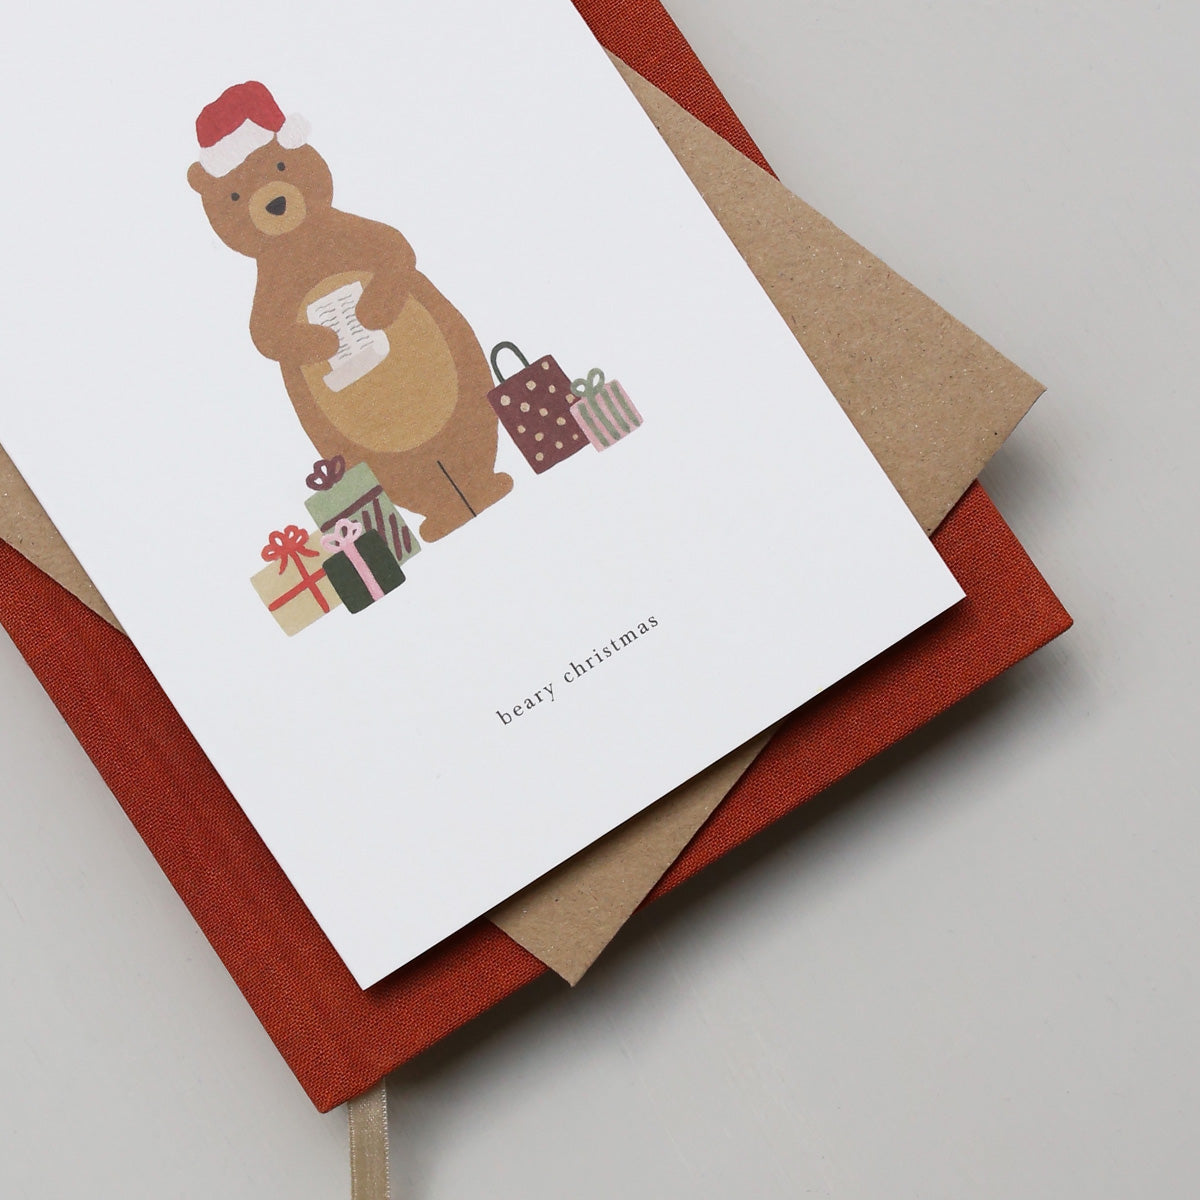 GREETING CARD // CHRISTMAS BEAR